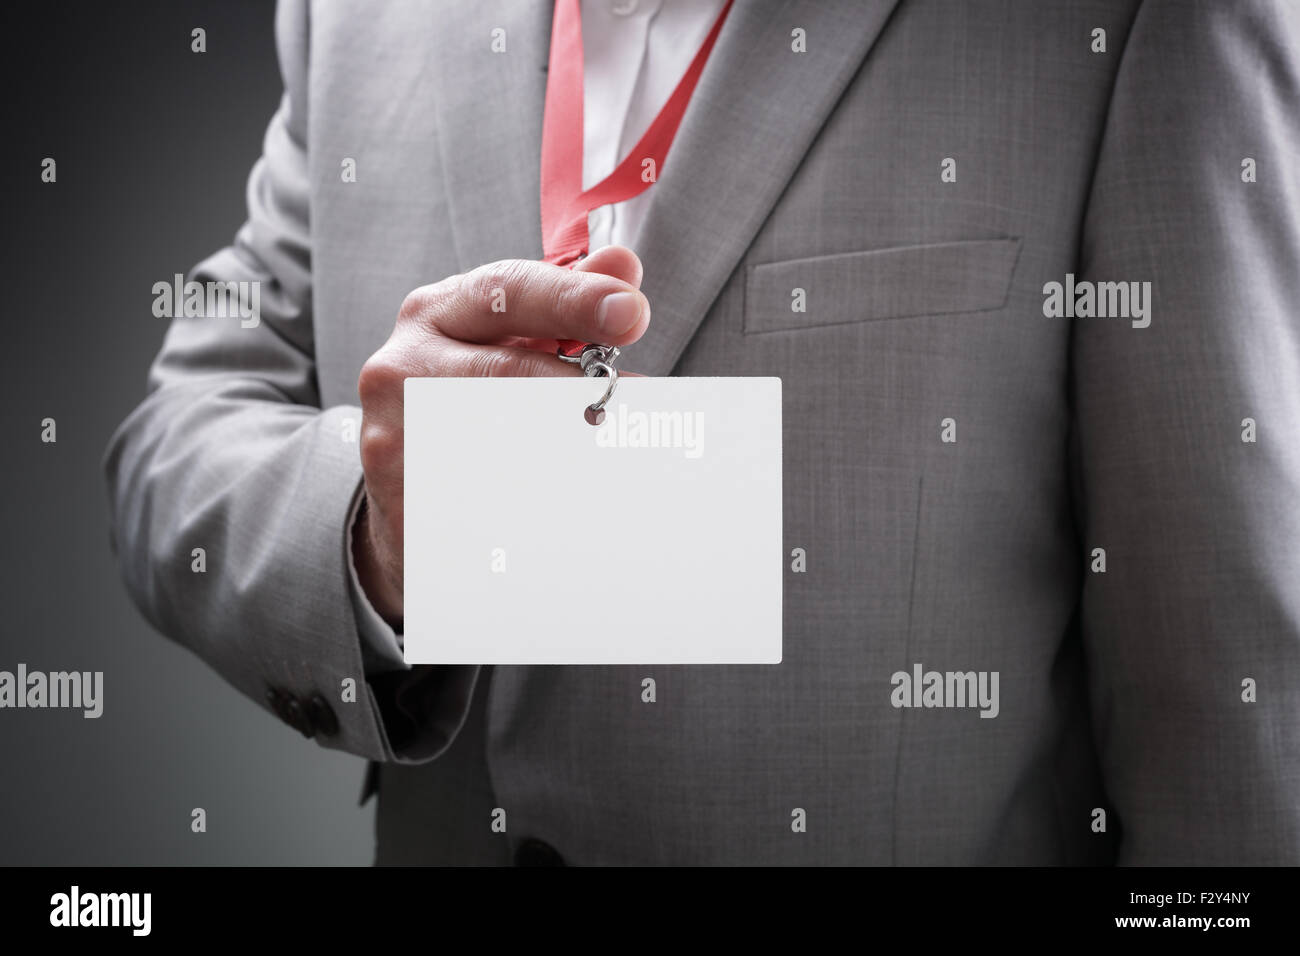 Businessman holding blank ID badge Stock Photo